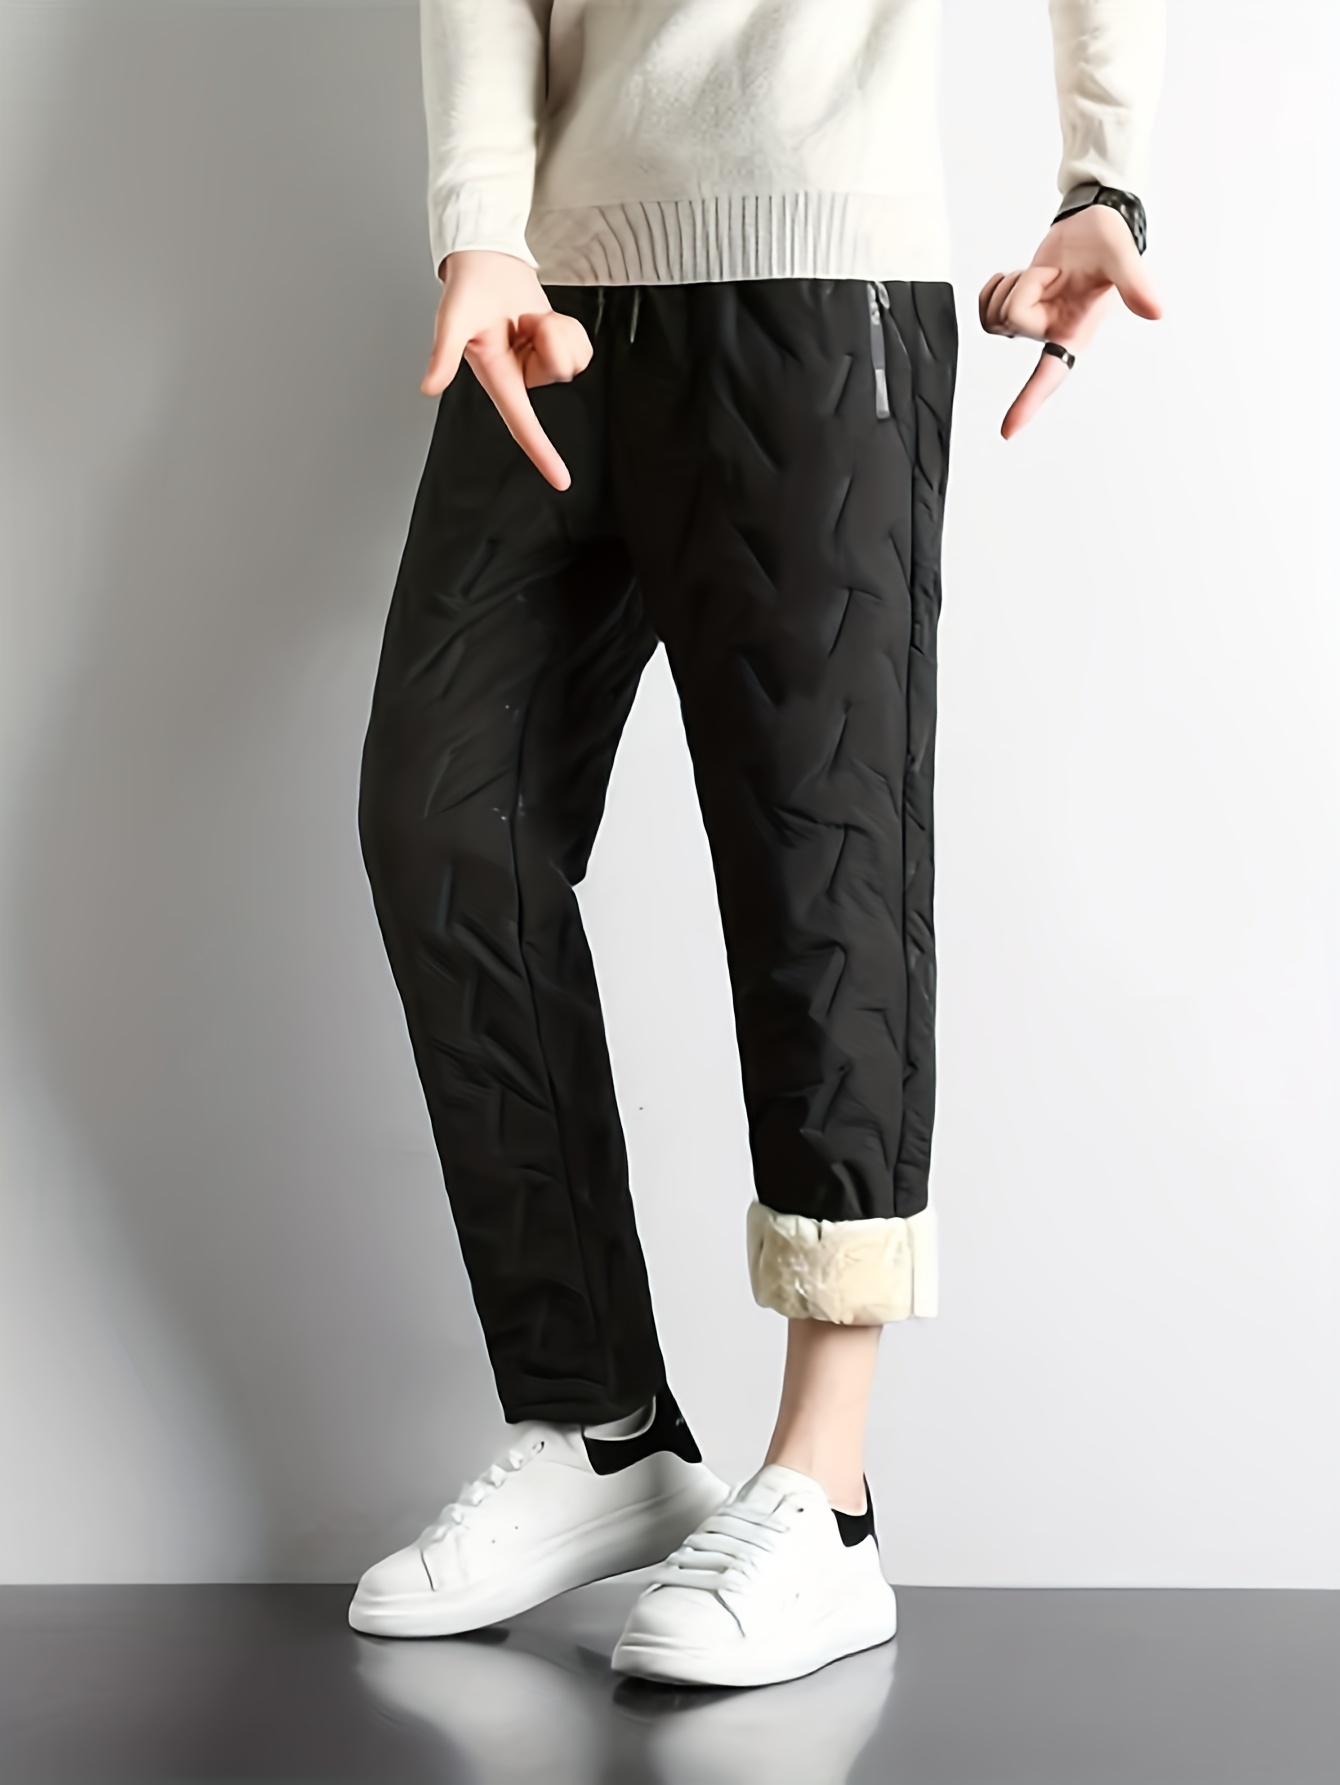 Women's Thick Fleece Lined Pants Long Trousers Warm Sweatpants